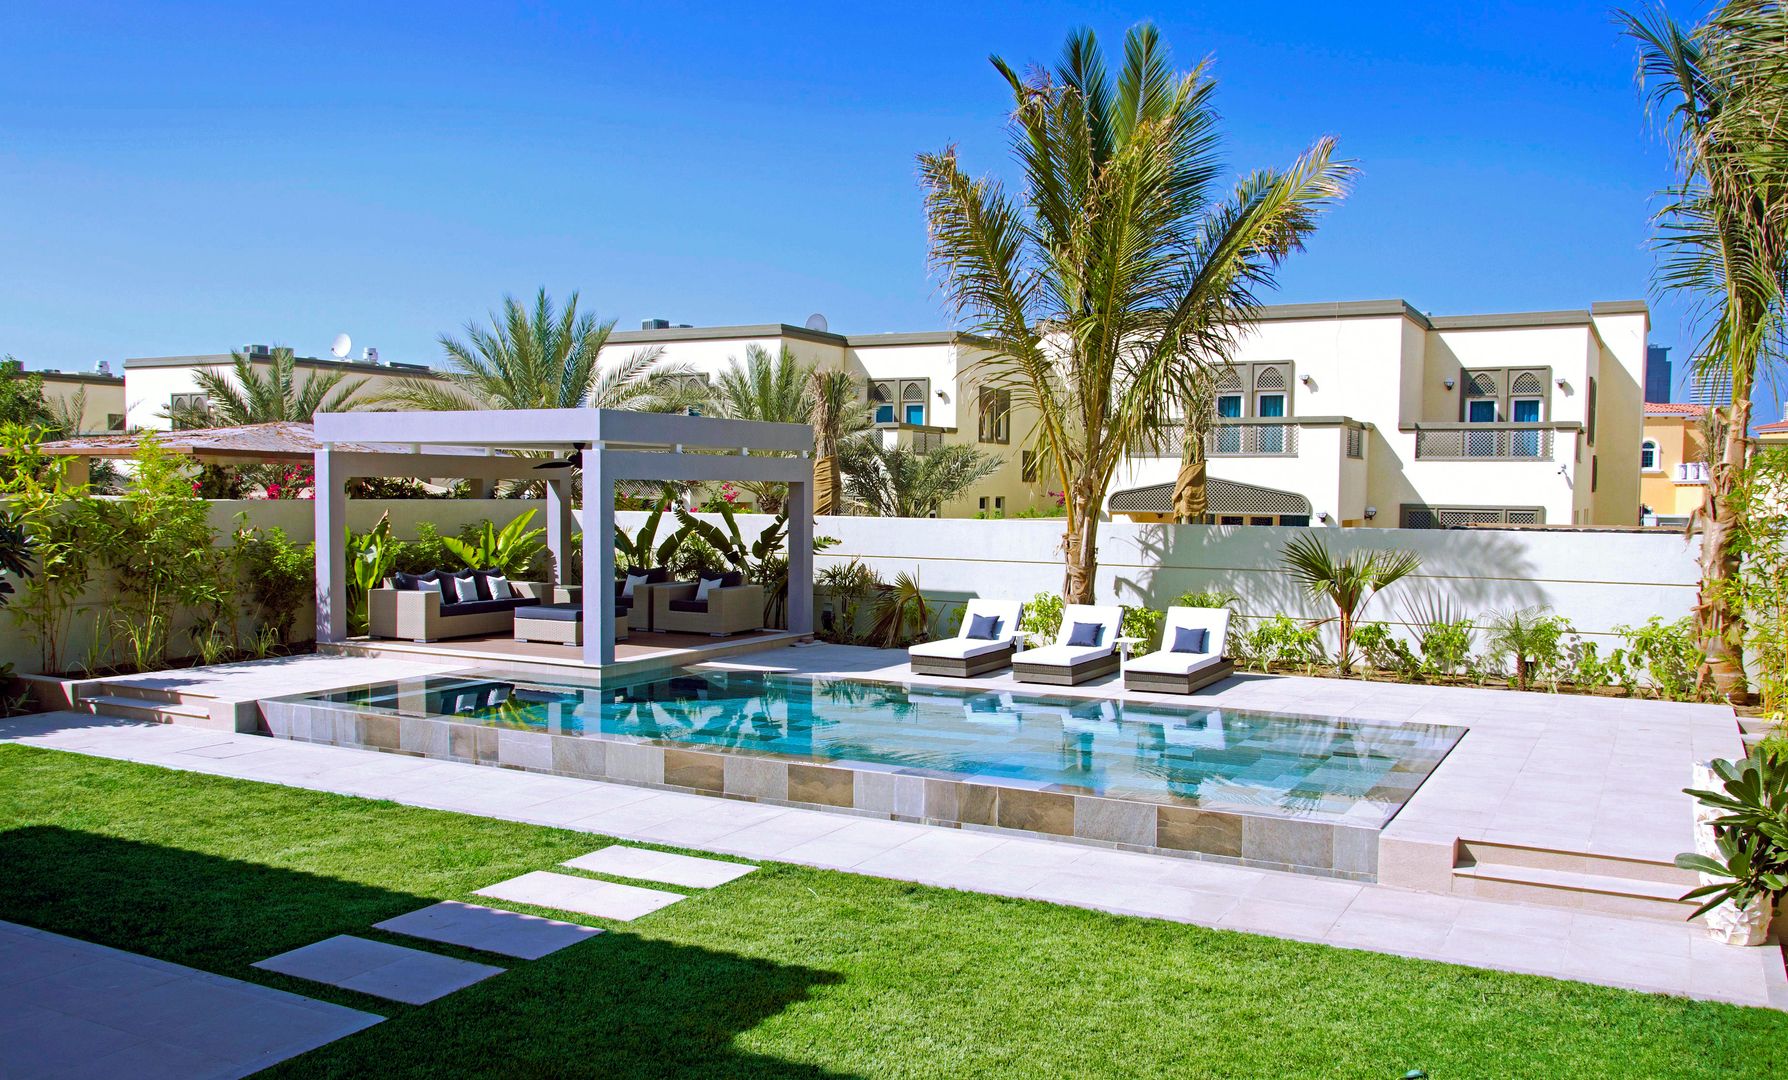 Infinity pool in Italian porcelain tiles Xterior Landscaping and Pools Piscinas modernas swimming pool Dubai,landscape,design